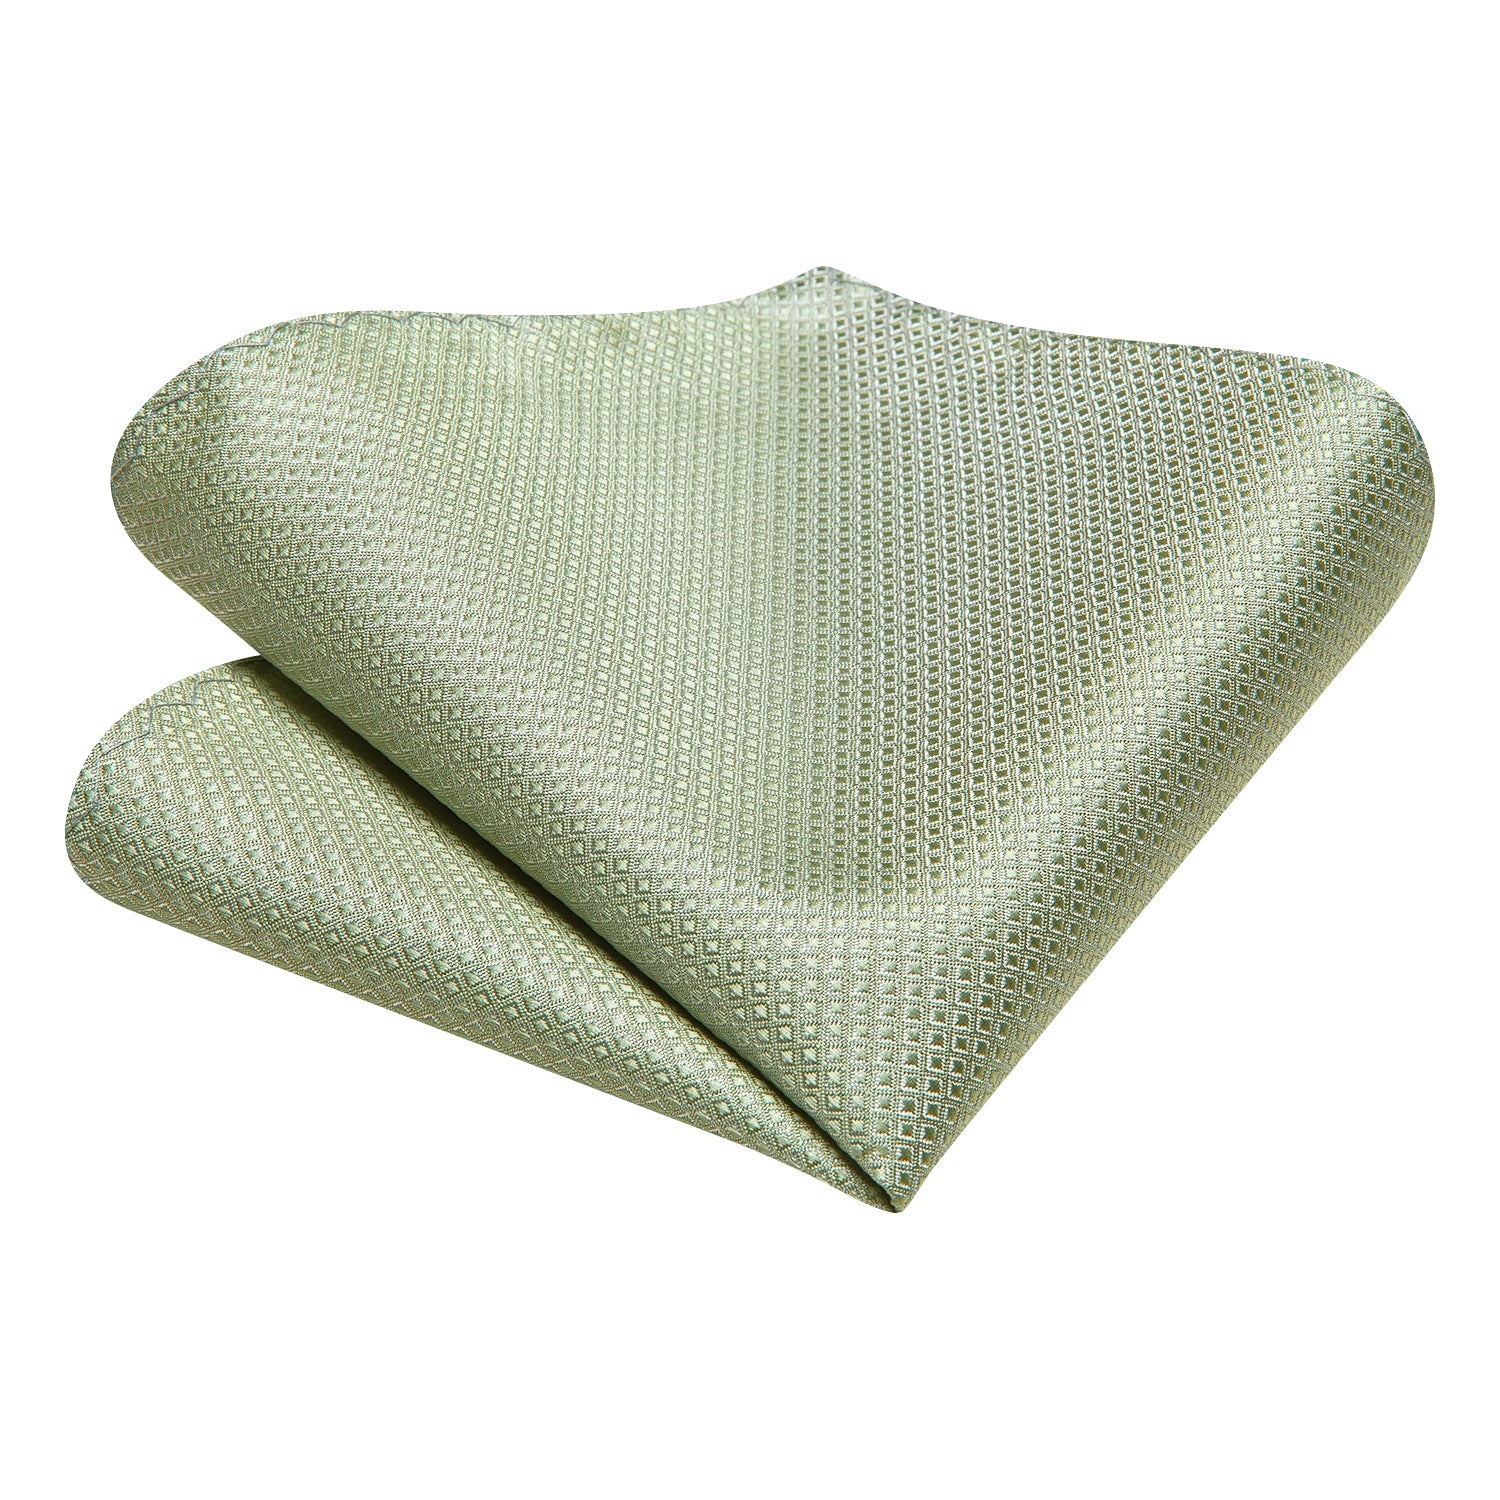  Mint Green Solid 67" Extra Long Tie Handkerchief Cufflinks Set